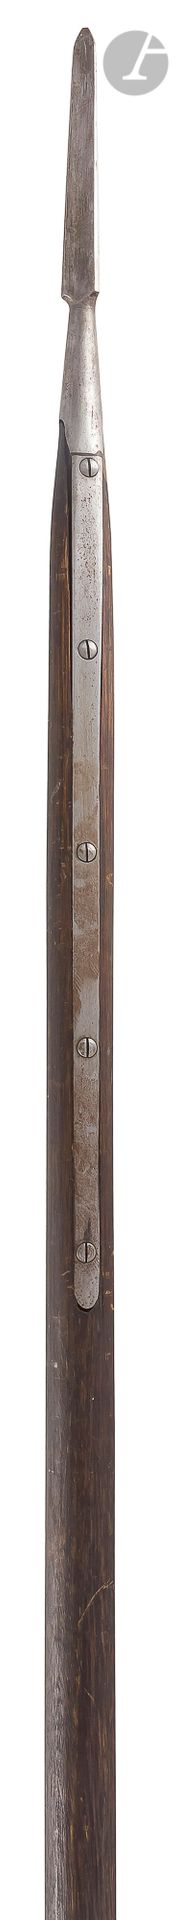 Null 海上铲子。

插座上有三面平的铁片，铁片和夹板。熏黑的白蜡木杆，配有皮革。

B.E. 大约1830-1850年。